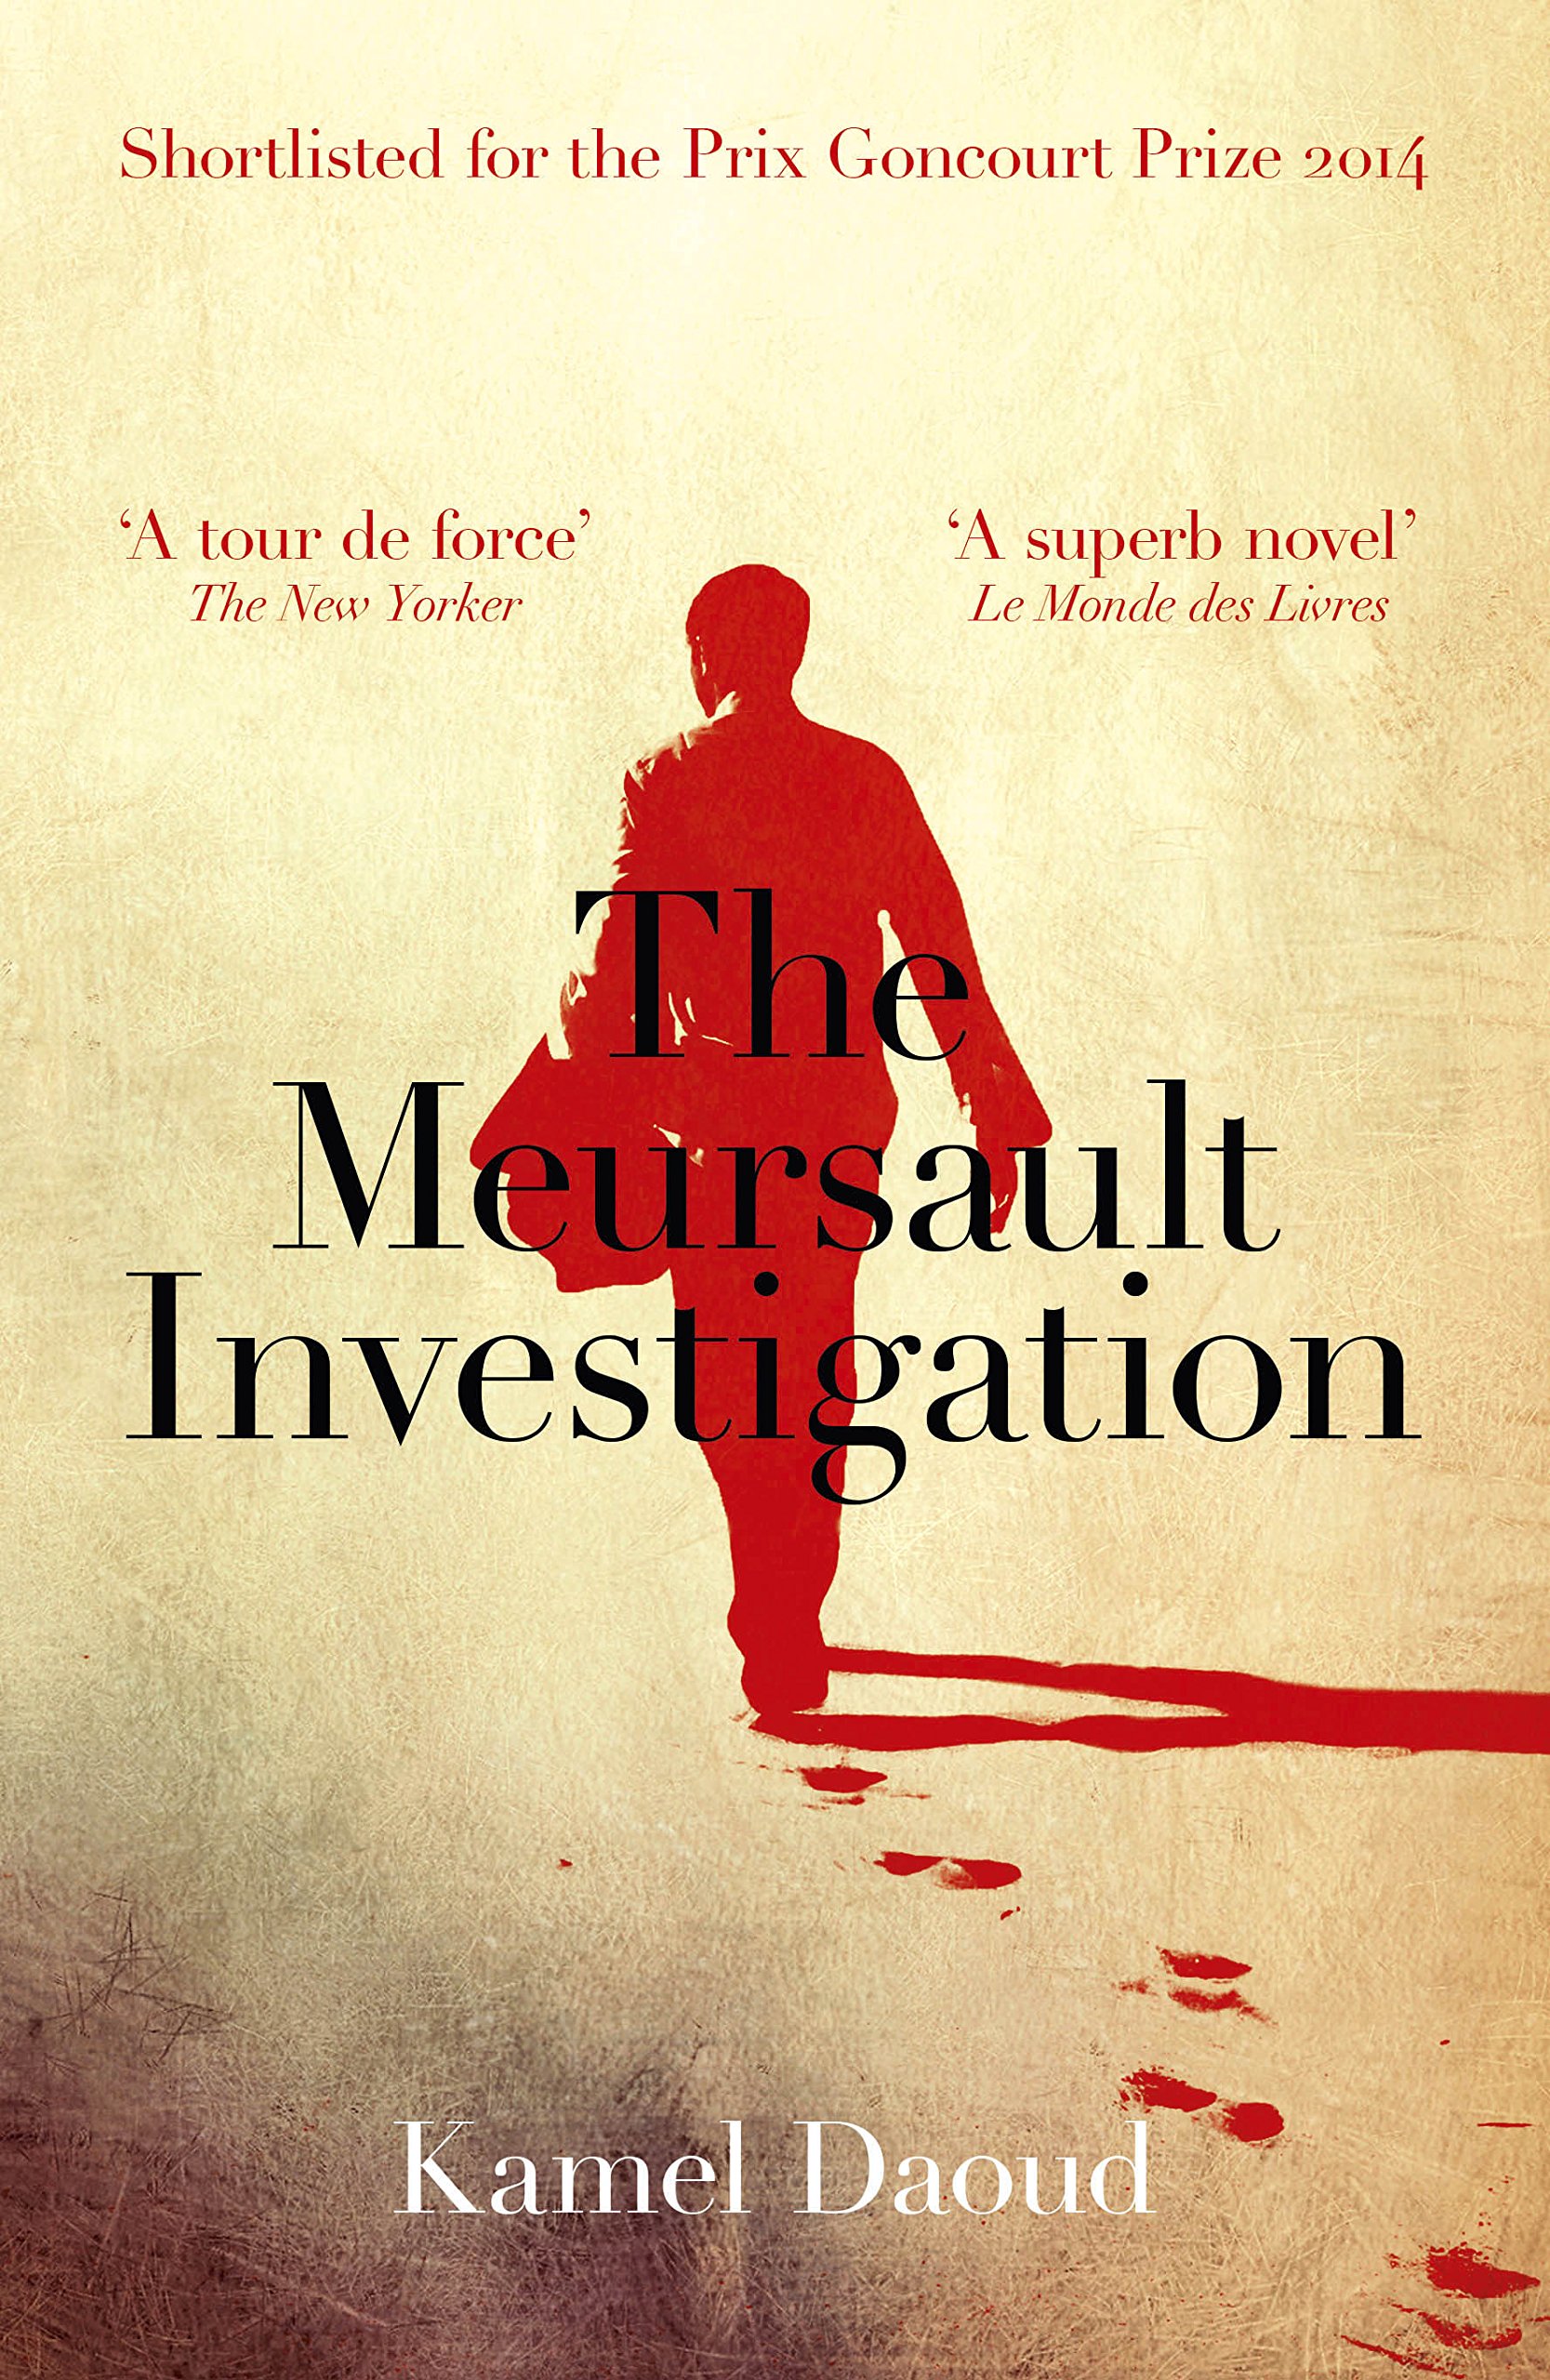 Cover of Kamel Daoud's novel "The Meursault Investigation" (source: Oneworld Publications)